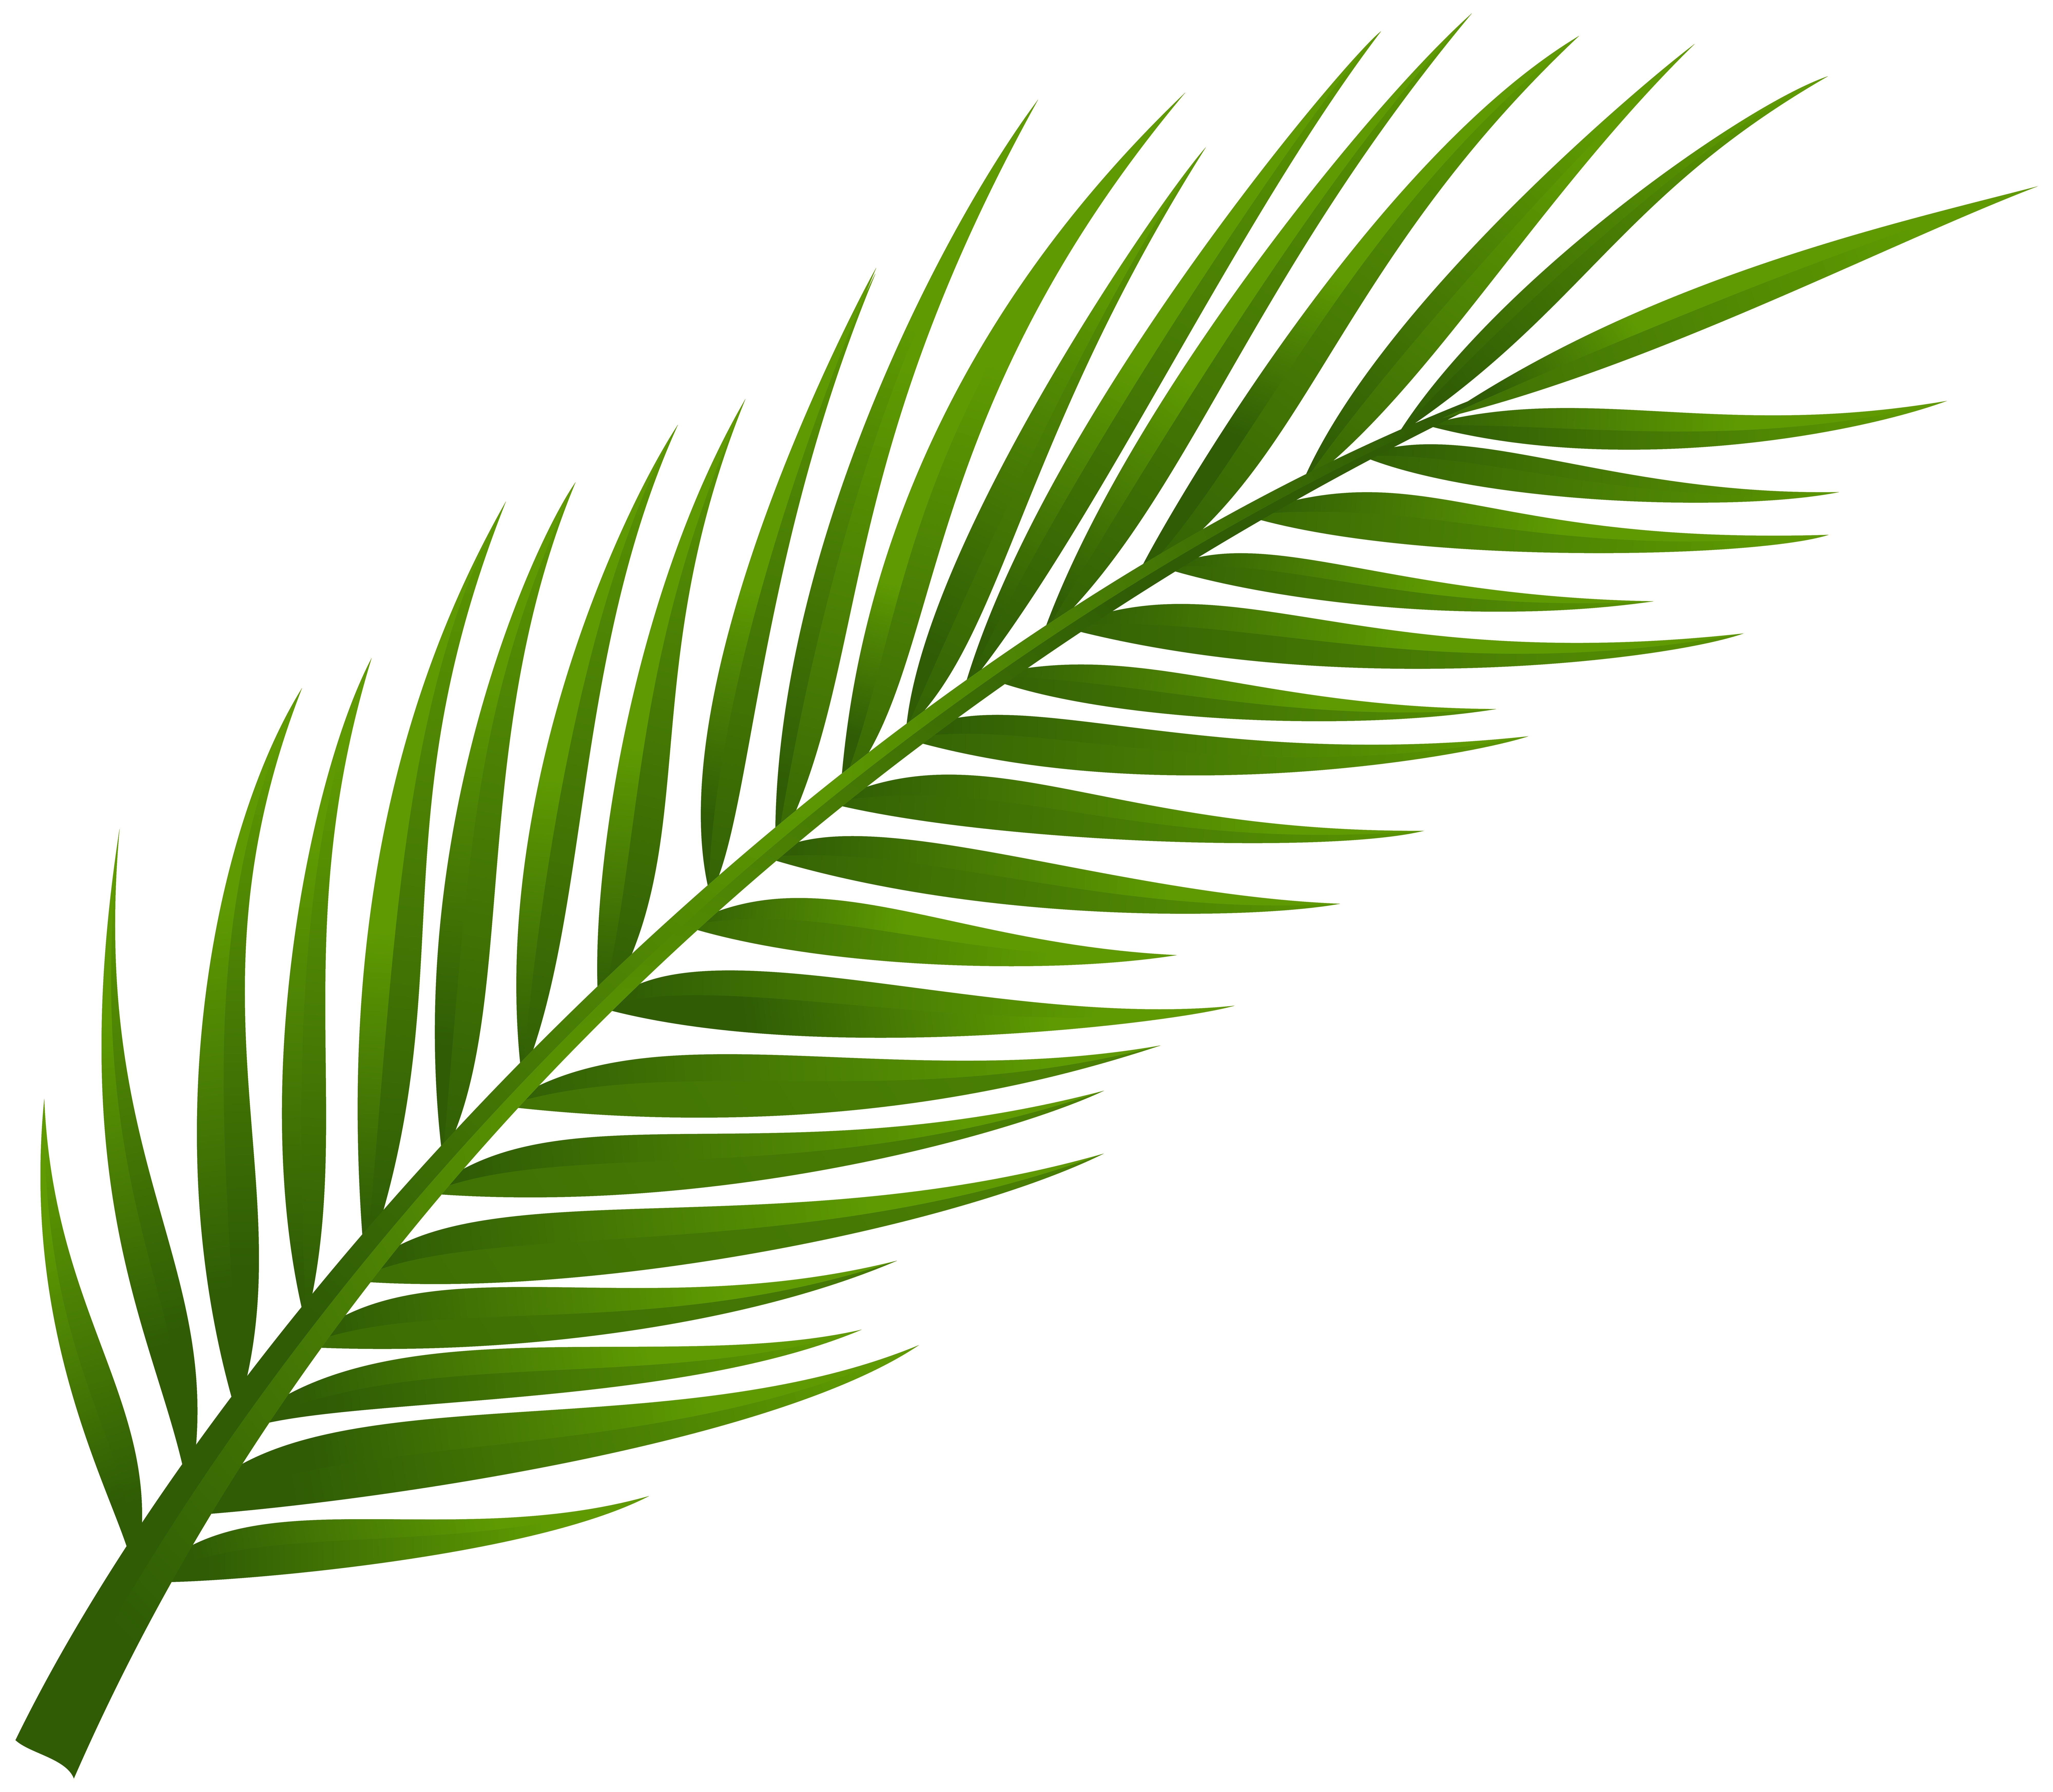 Palm Tree Leaf Template | Lea